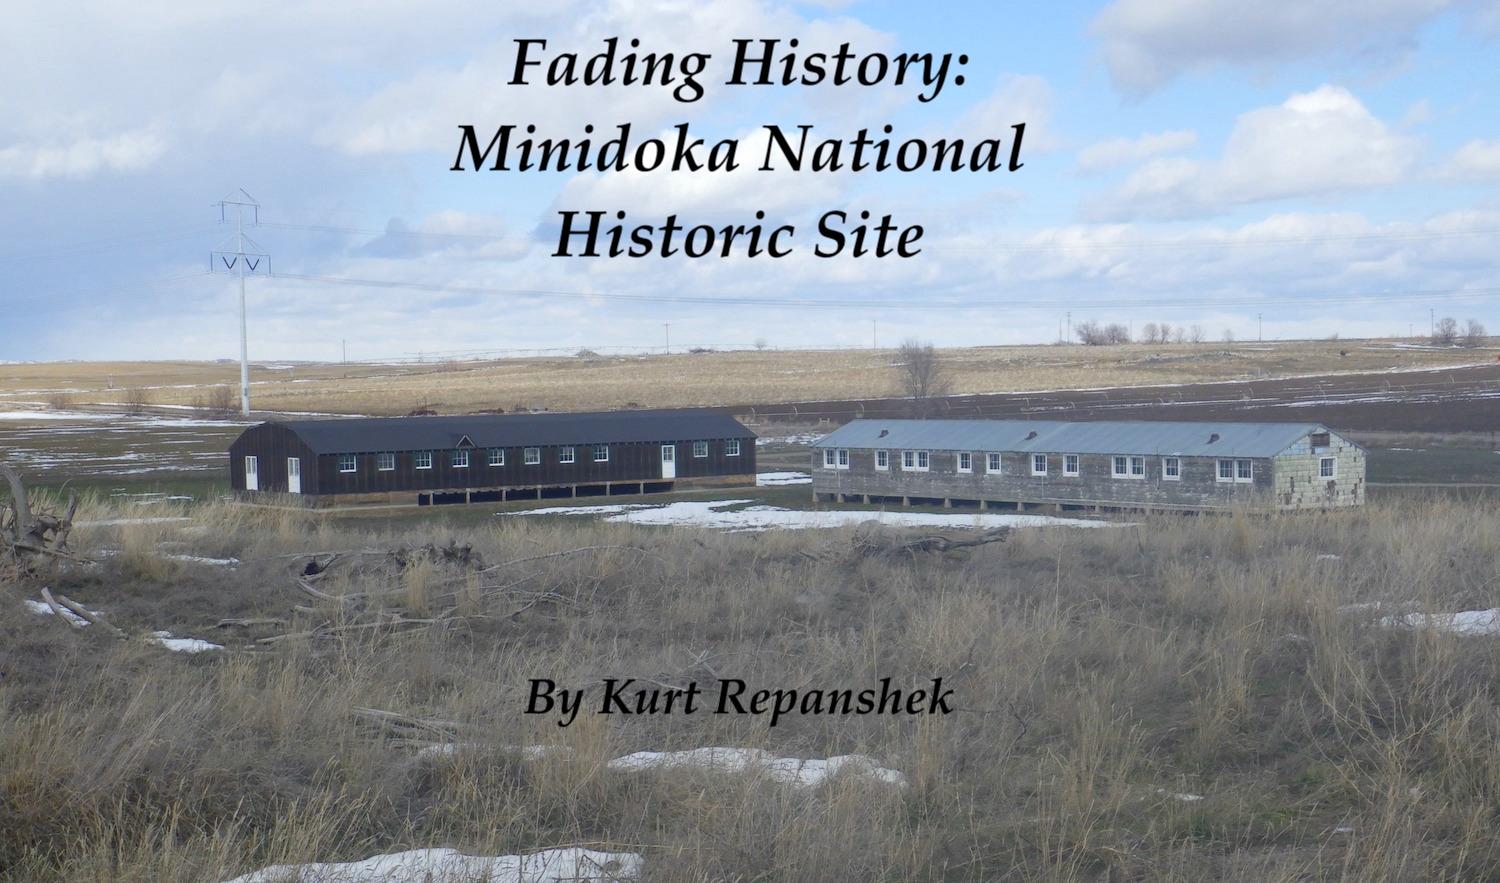 Minidoka National Historic Site/Kurt Repanshek